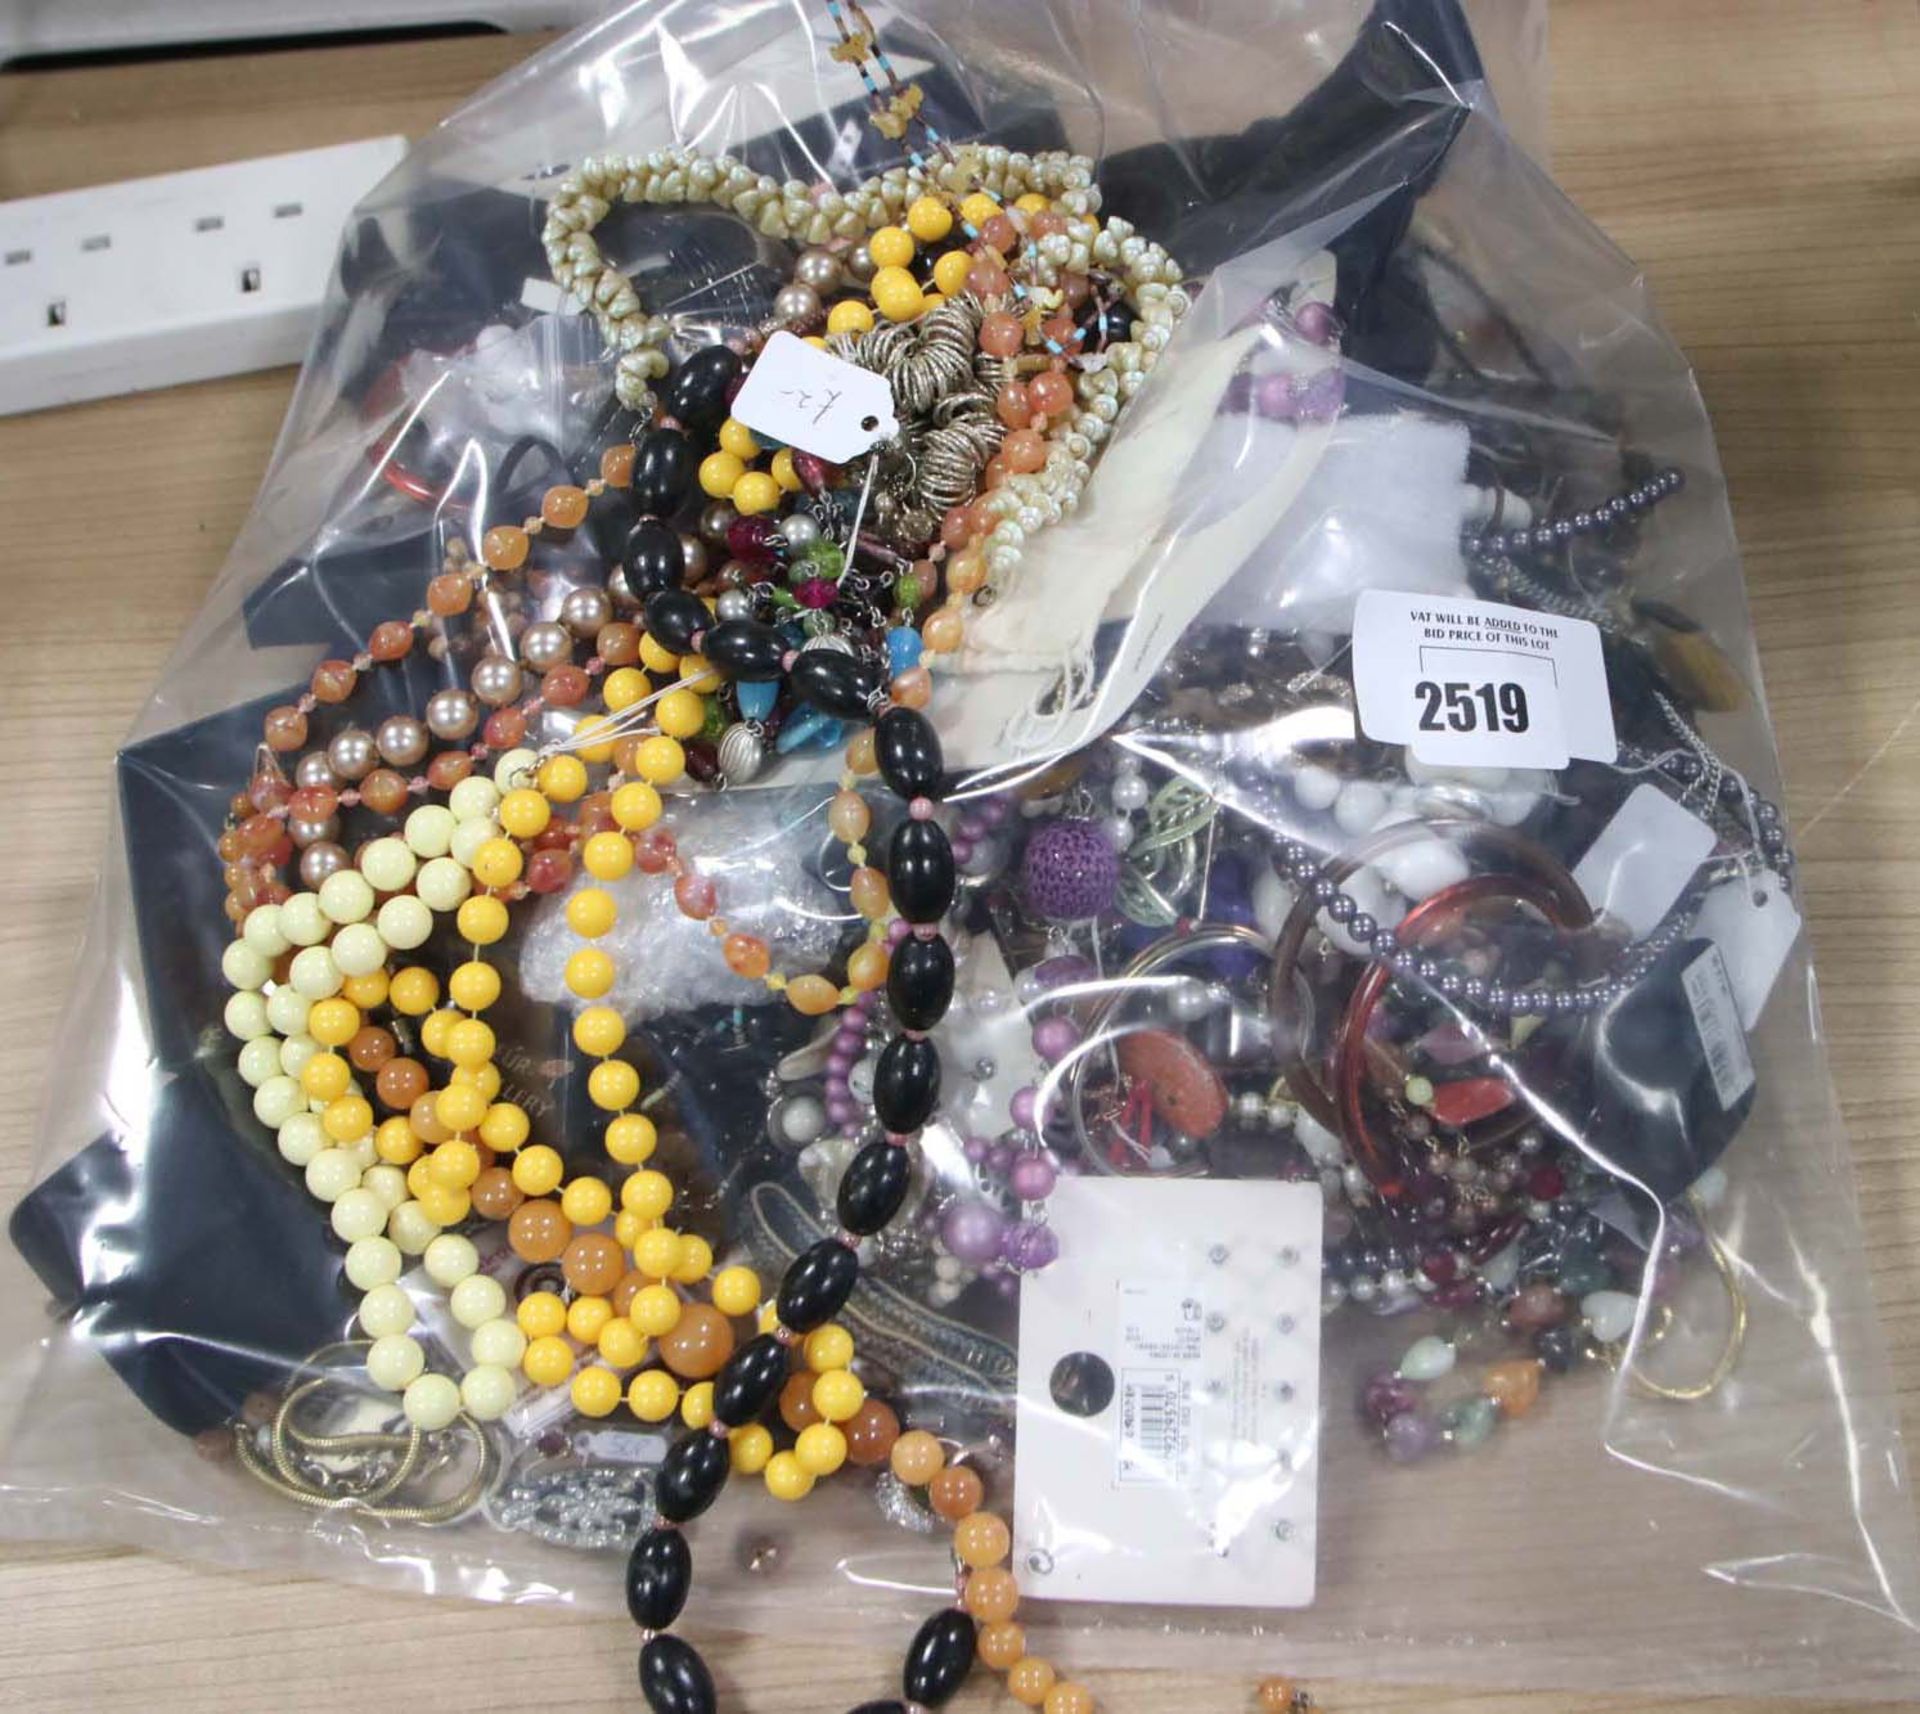 Bag containing costume jewellery